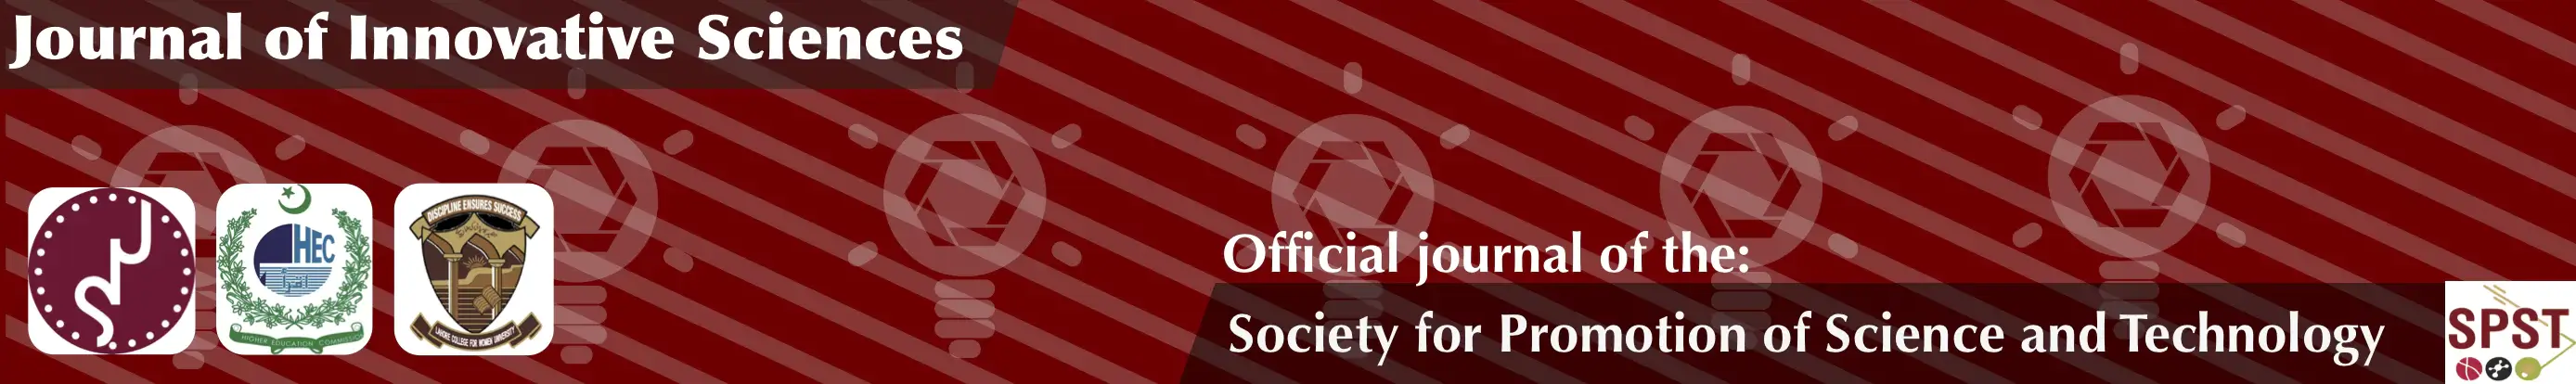 Journal of Innovative Sciences